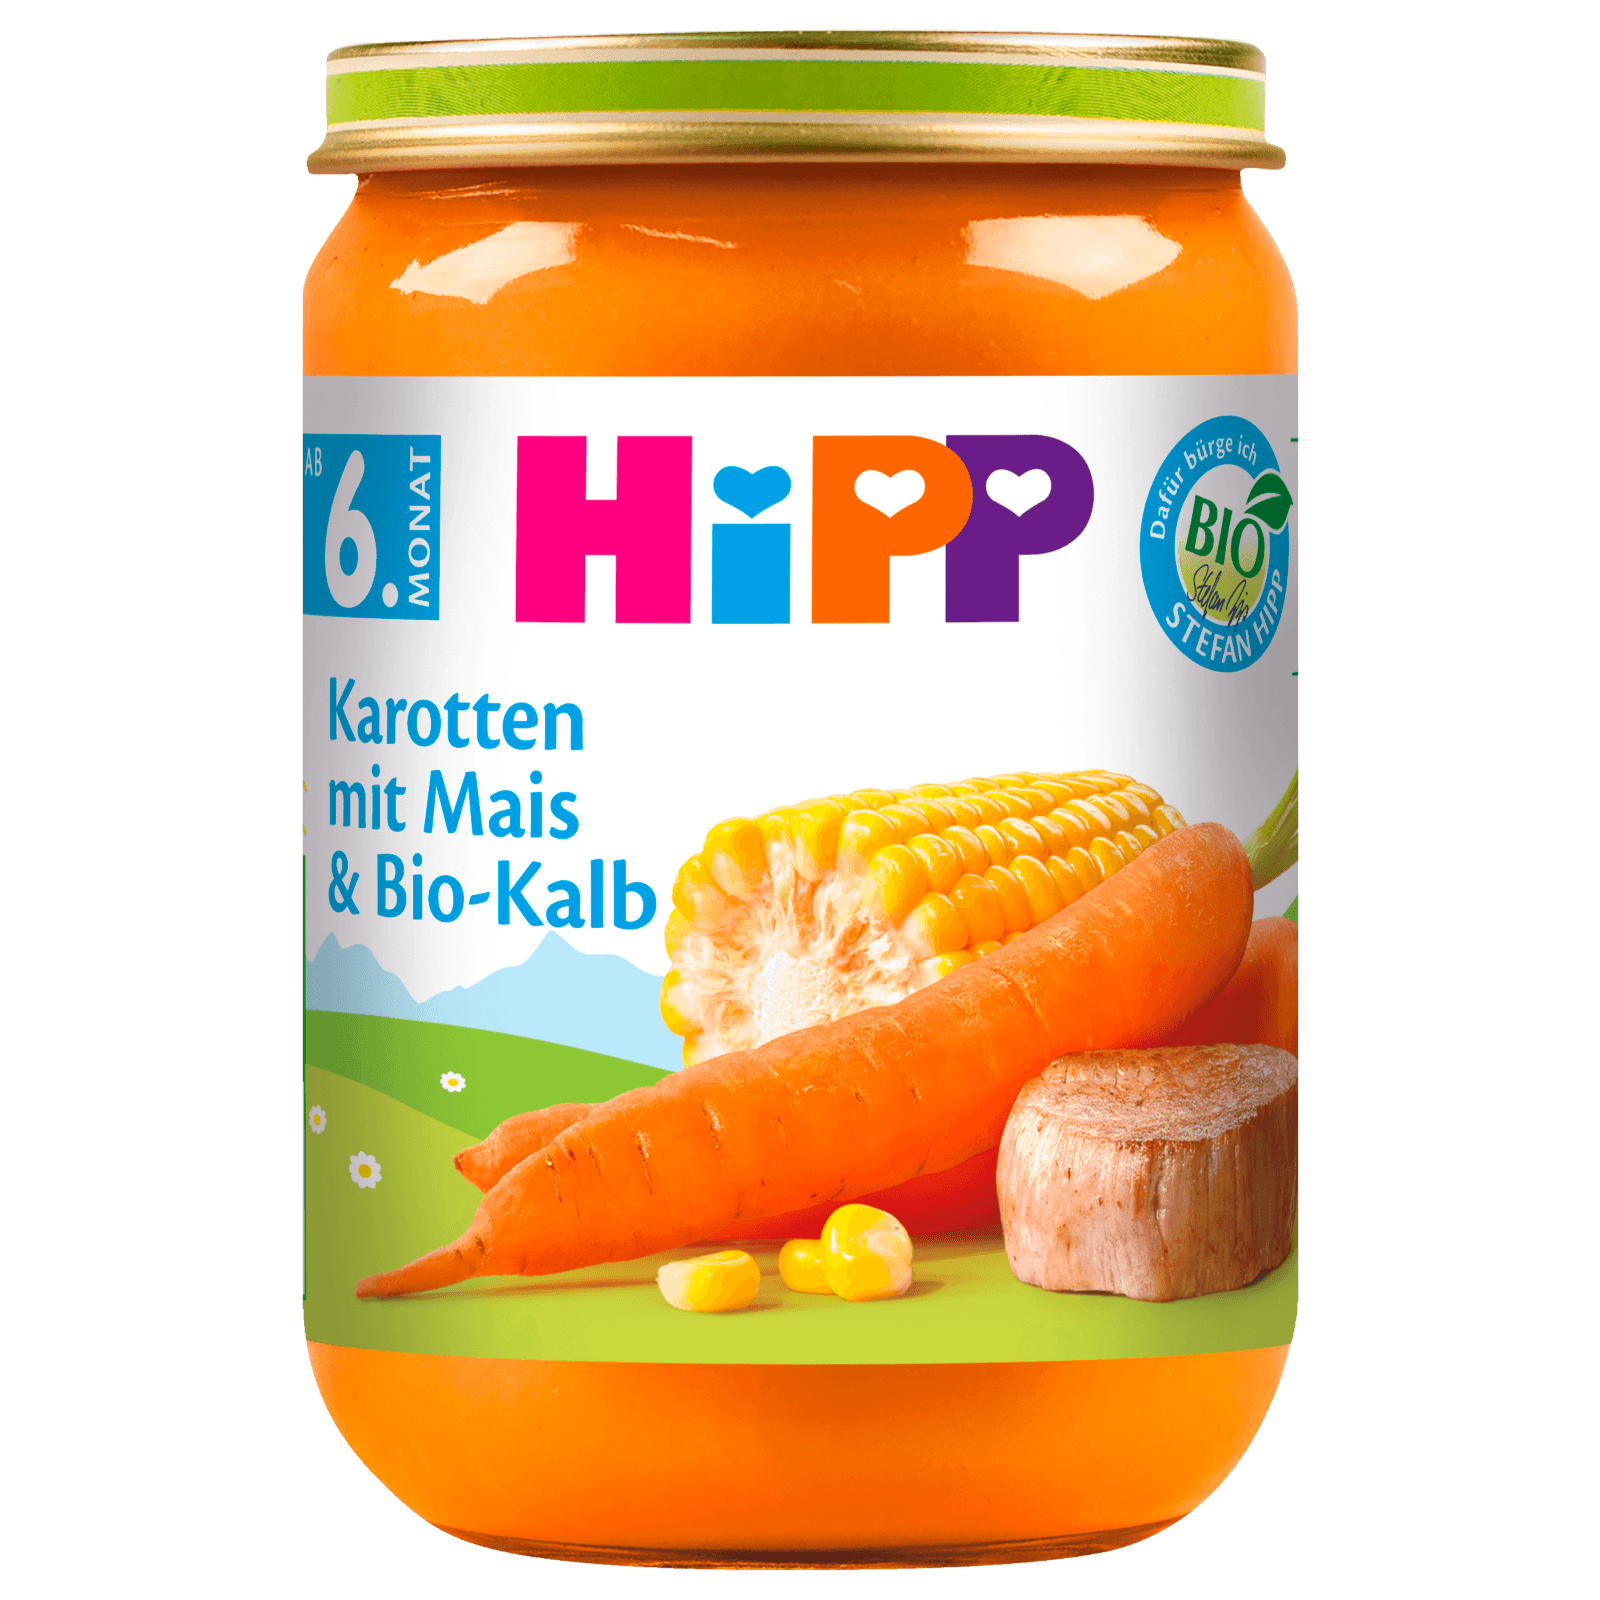 Hipp Karotten mit Mais & Bio-Kalb 190g